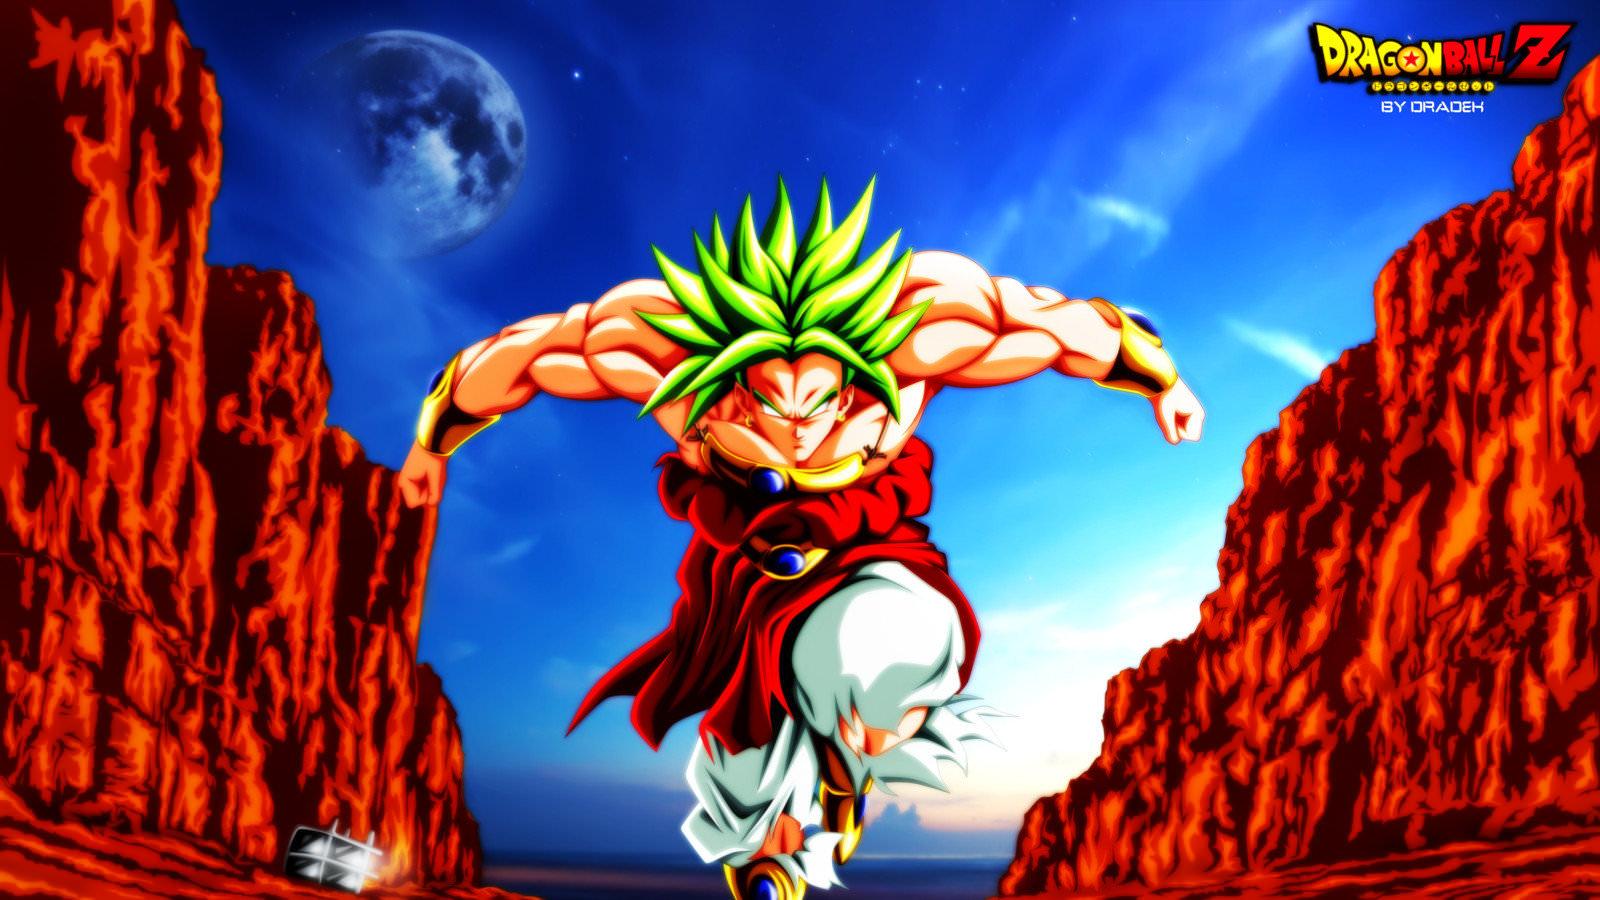 Broly (Dragon Ball) wallpaper HD for desktop background